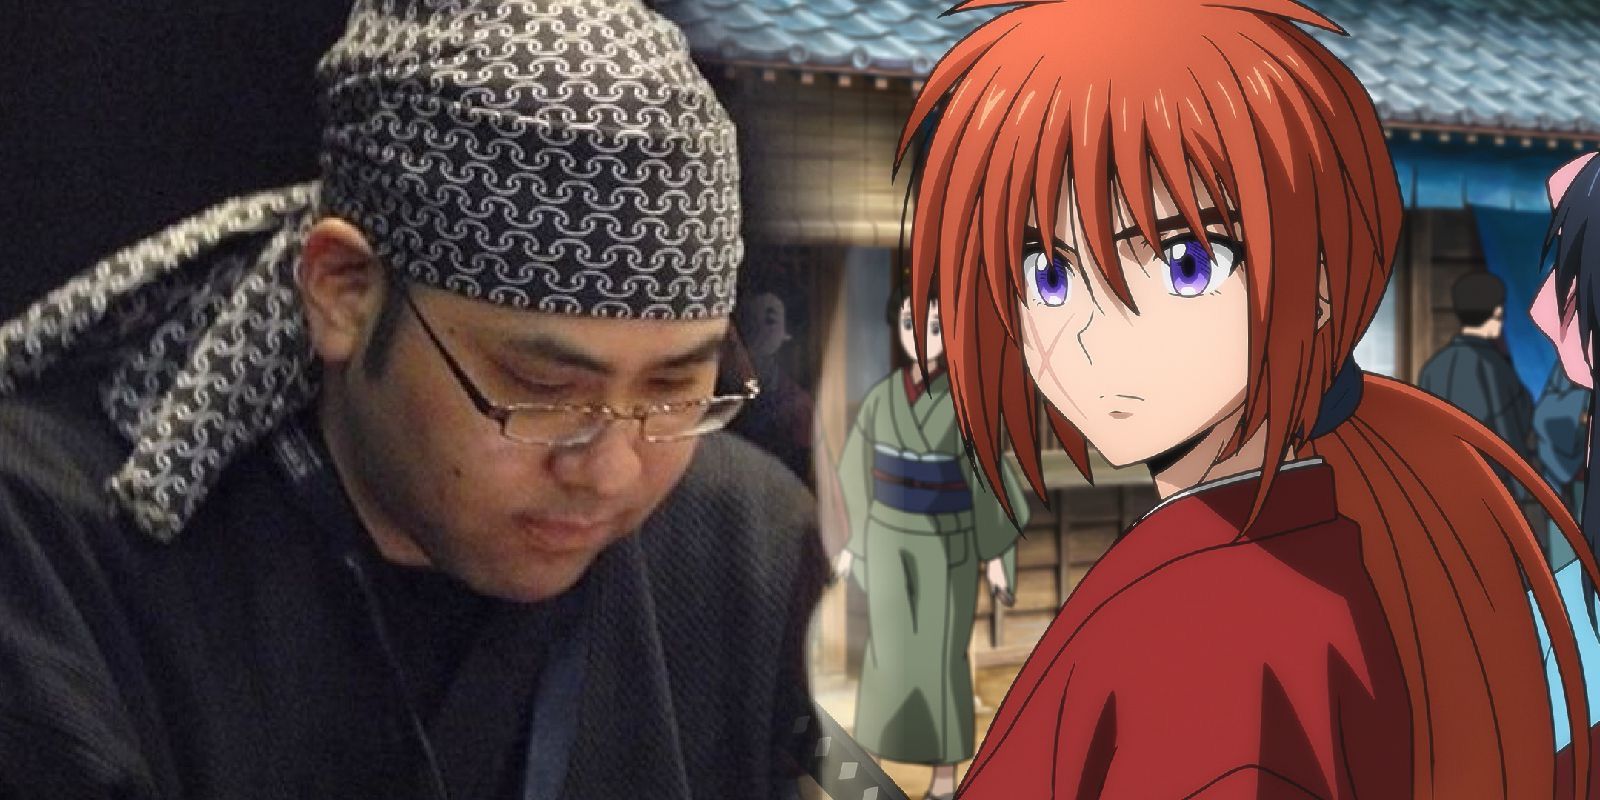 Rurouni Kenshin & Nobuhiro Watsuki: Should We Separate Art From The Artist?